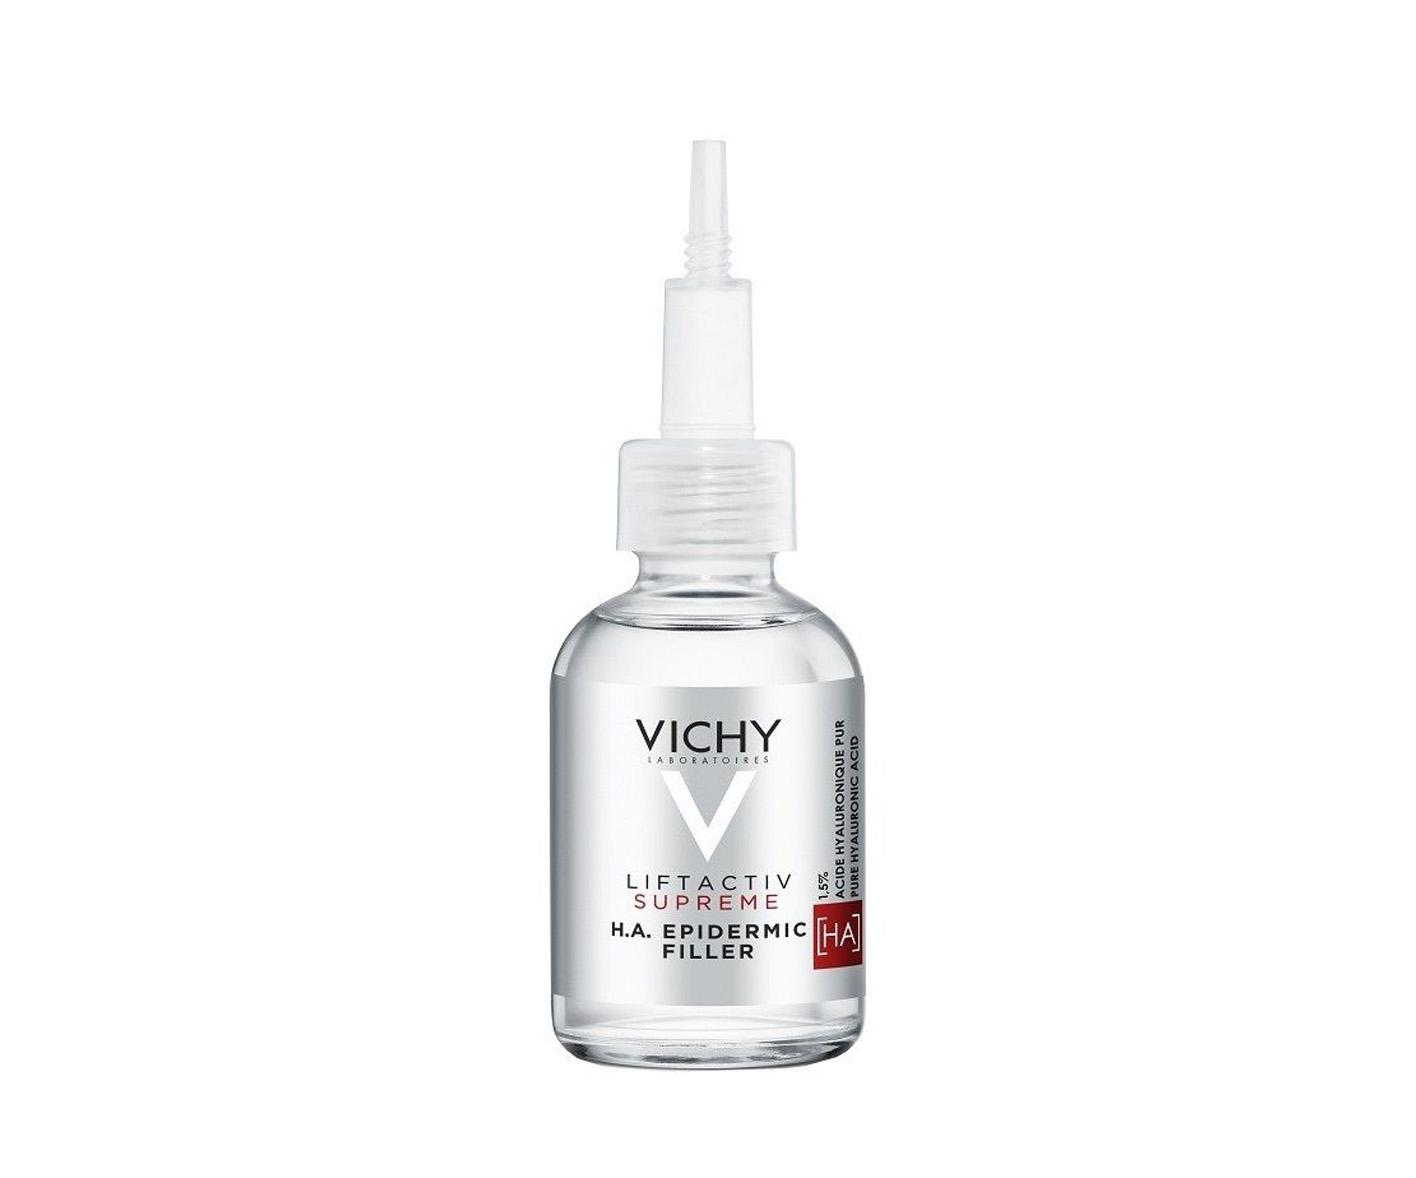 Vichy, Liftactiv Supreme, HA Epidermic Filler Serum, Anti-aging skin serum with hyaluronic acid